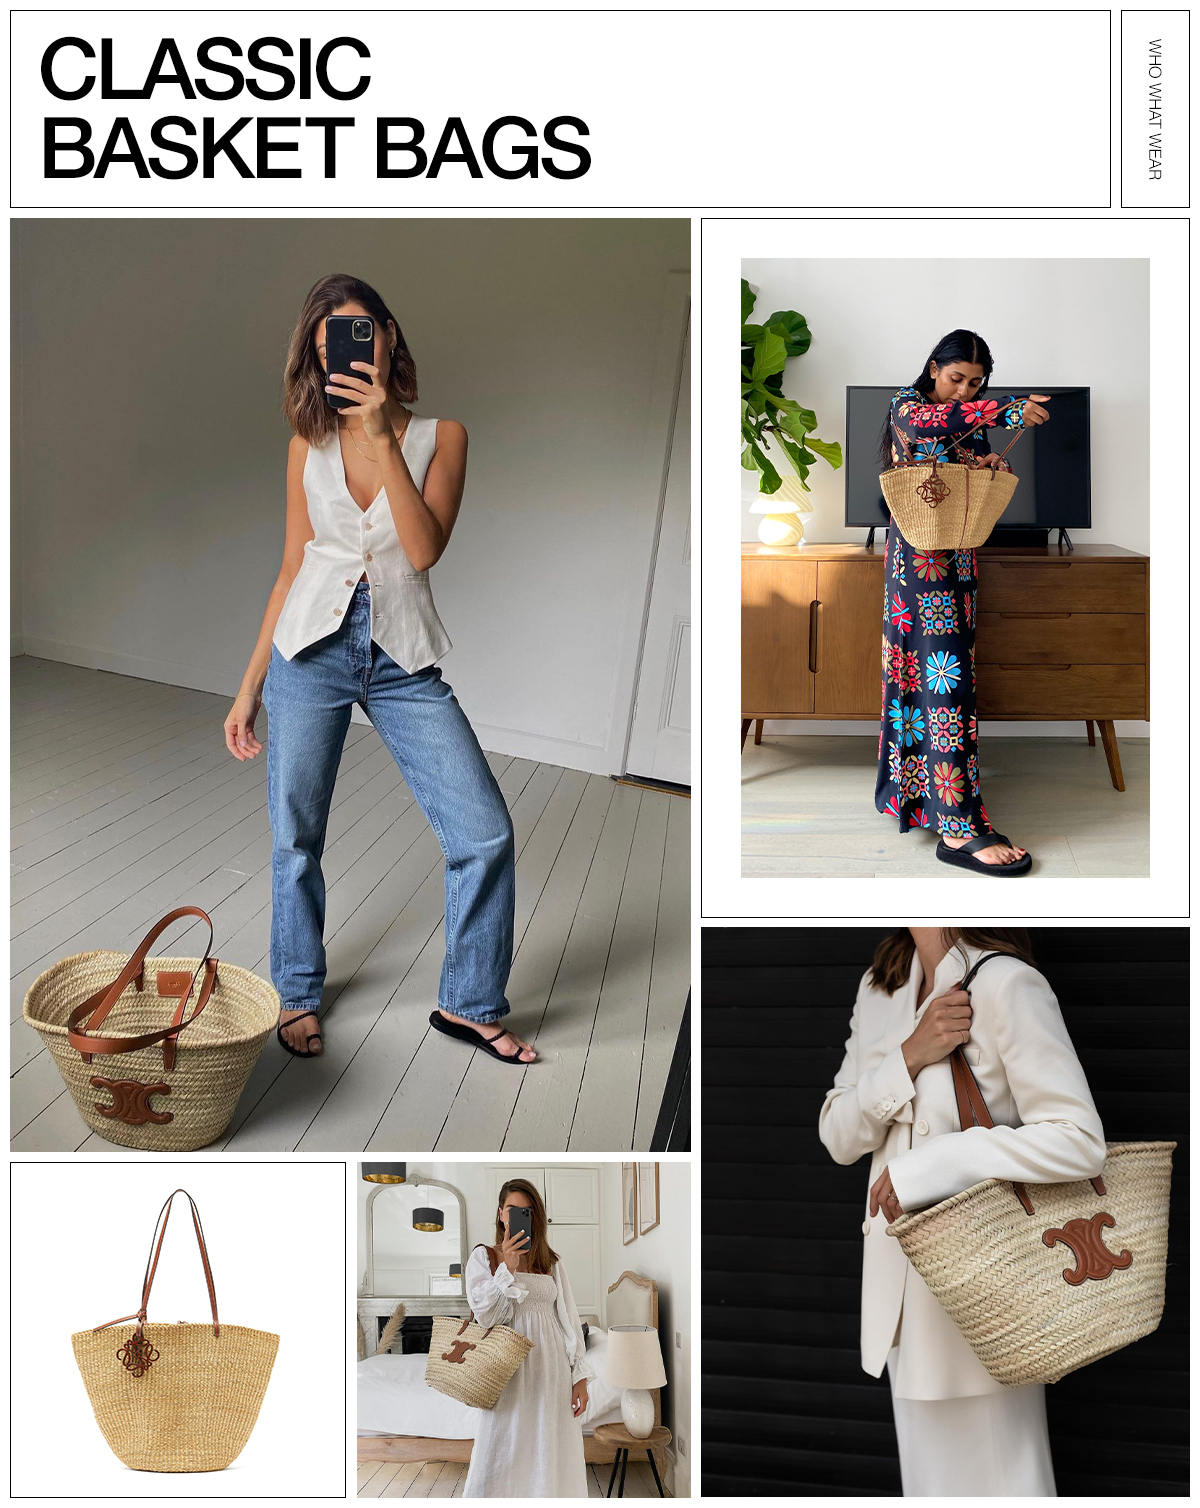 Summer handbags: Basket bags